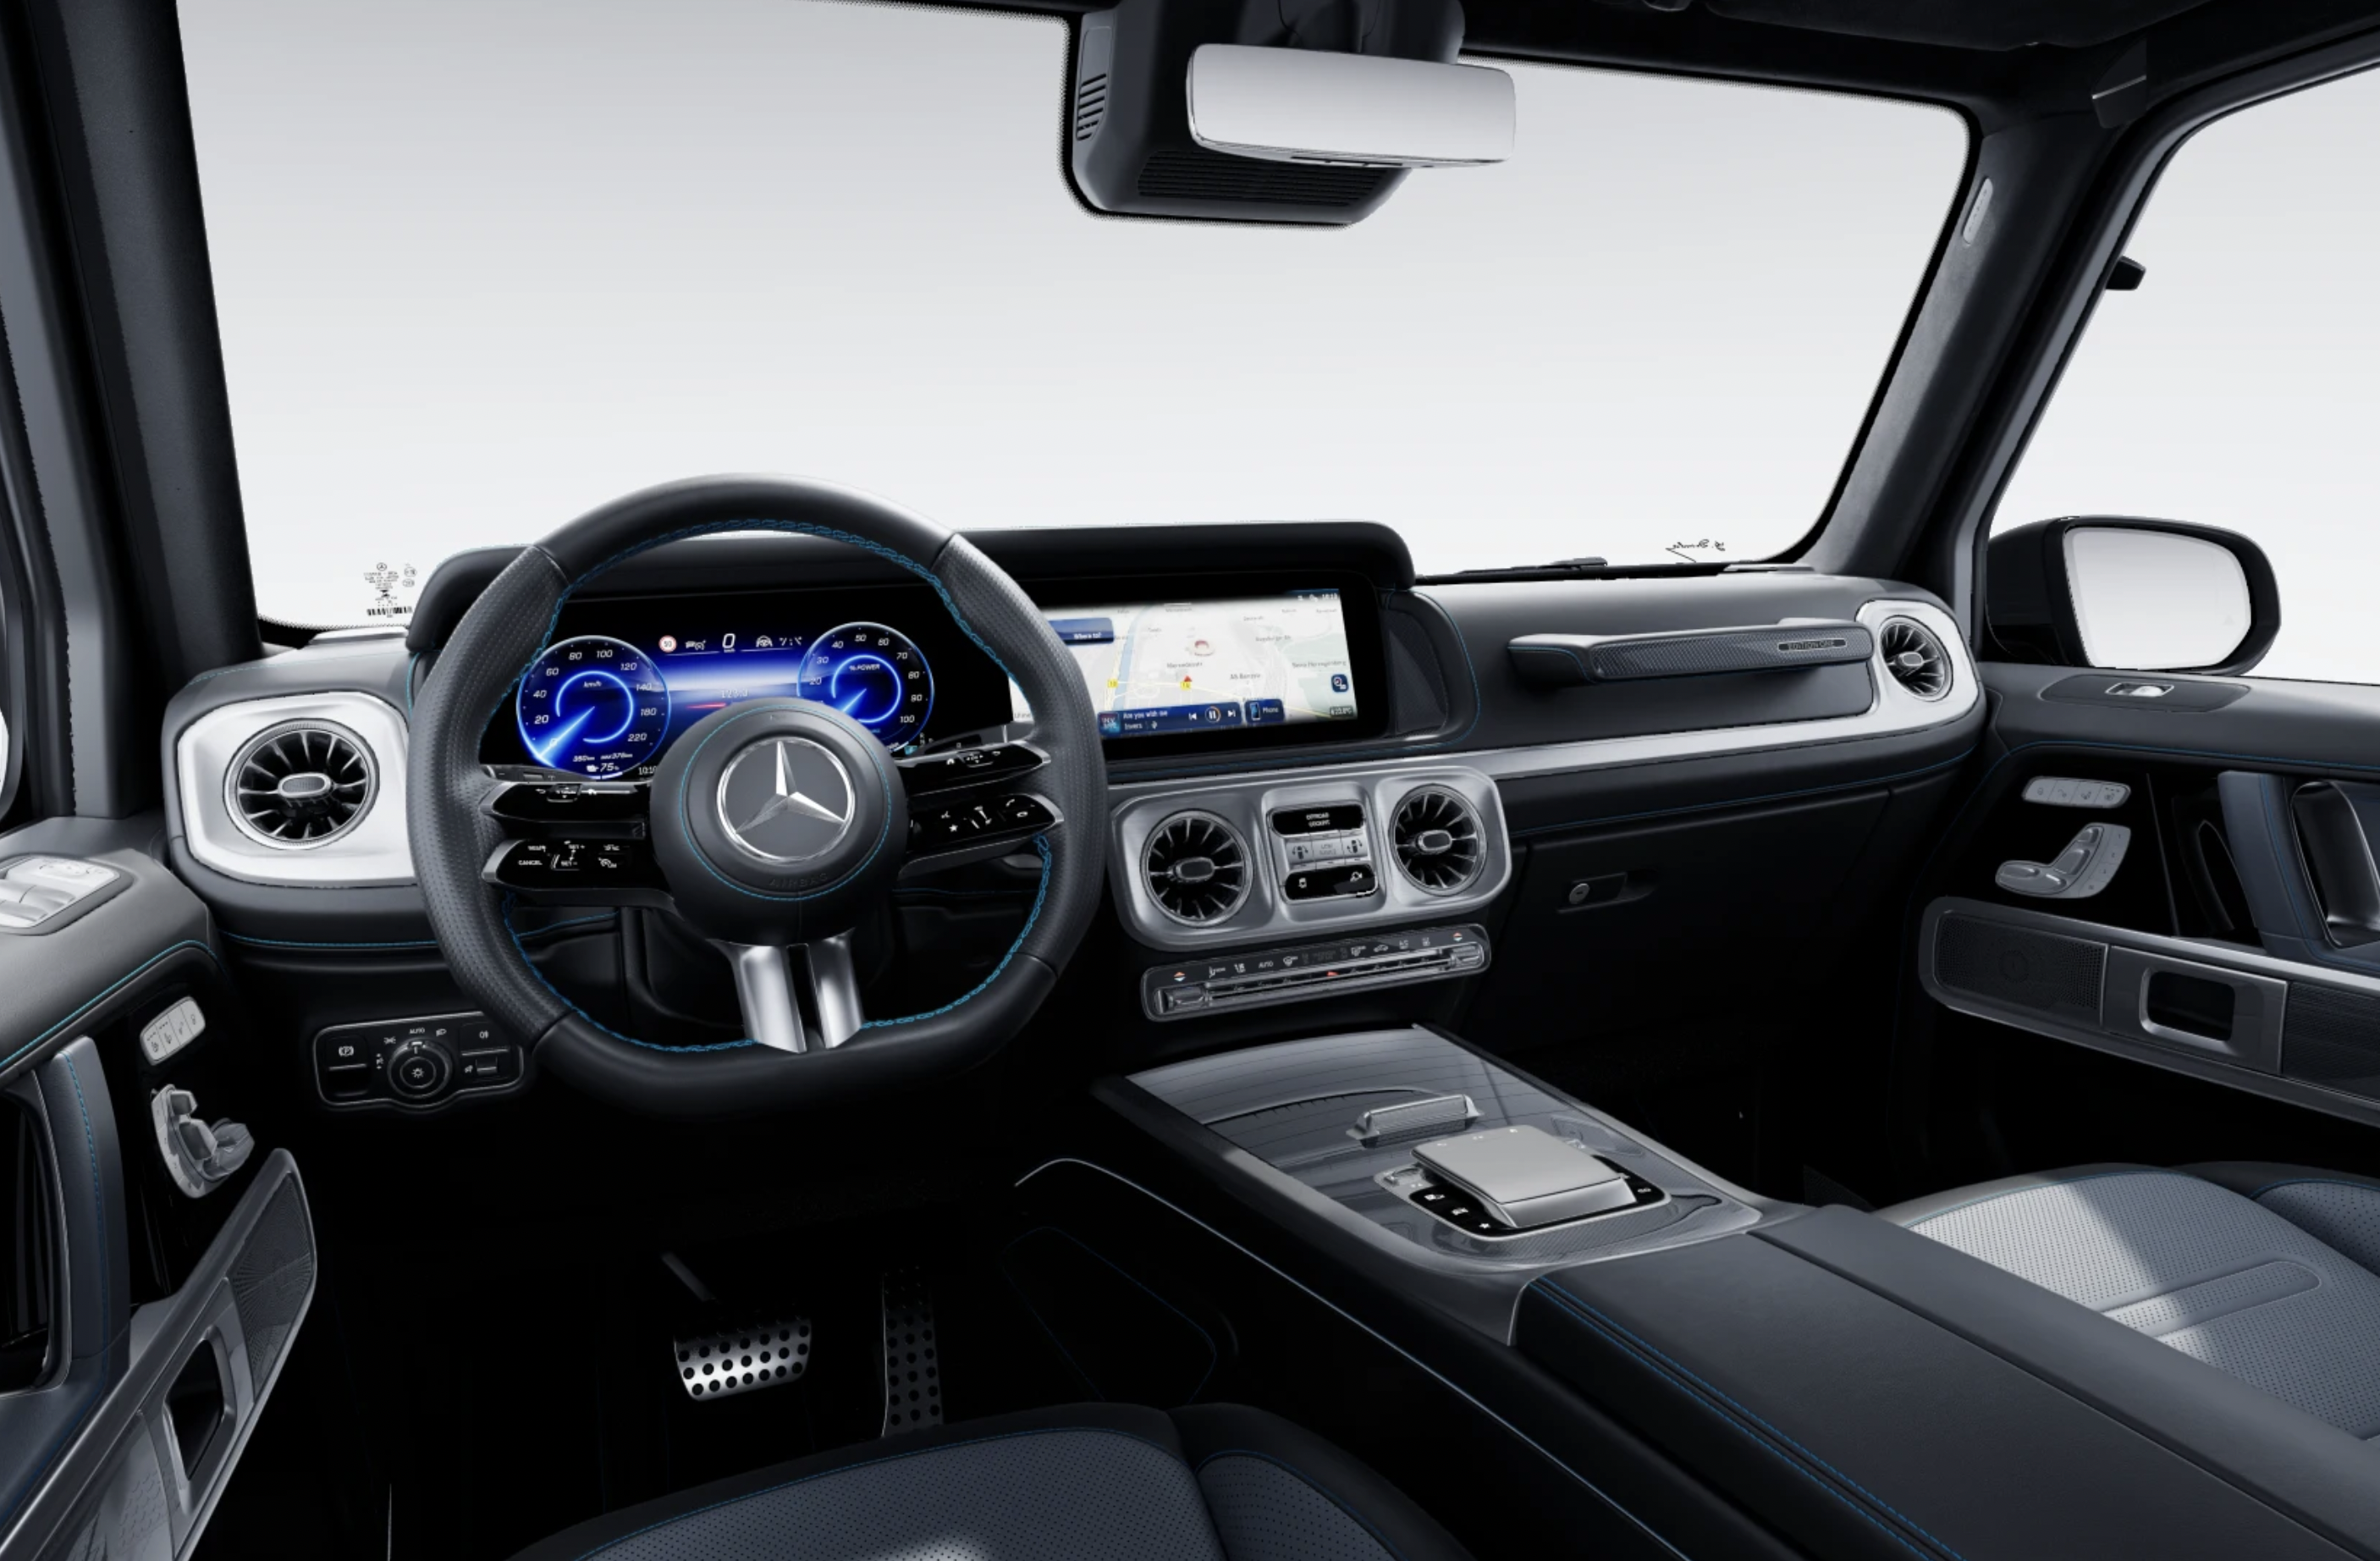 Mercedes-Benz G 580 EQ AMG EDITION ONE | elektro géčko | 587 koní | nové auto objednané do výroby | možnost změny barvy a výbavy | od autorizovaného dealera | max výbava | matná bílá Magno Opalite metalíza | novinka | super cena | online nákup | online prodej | autoibuy.com